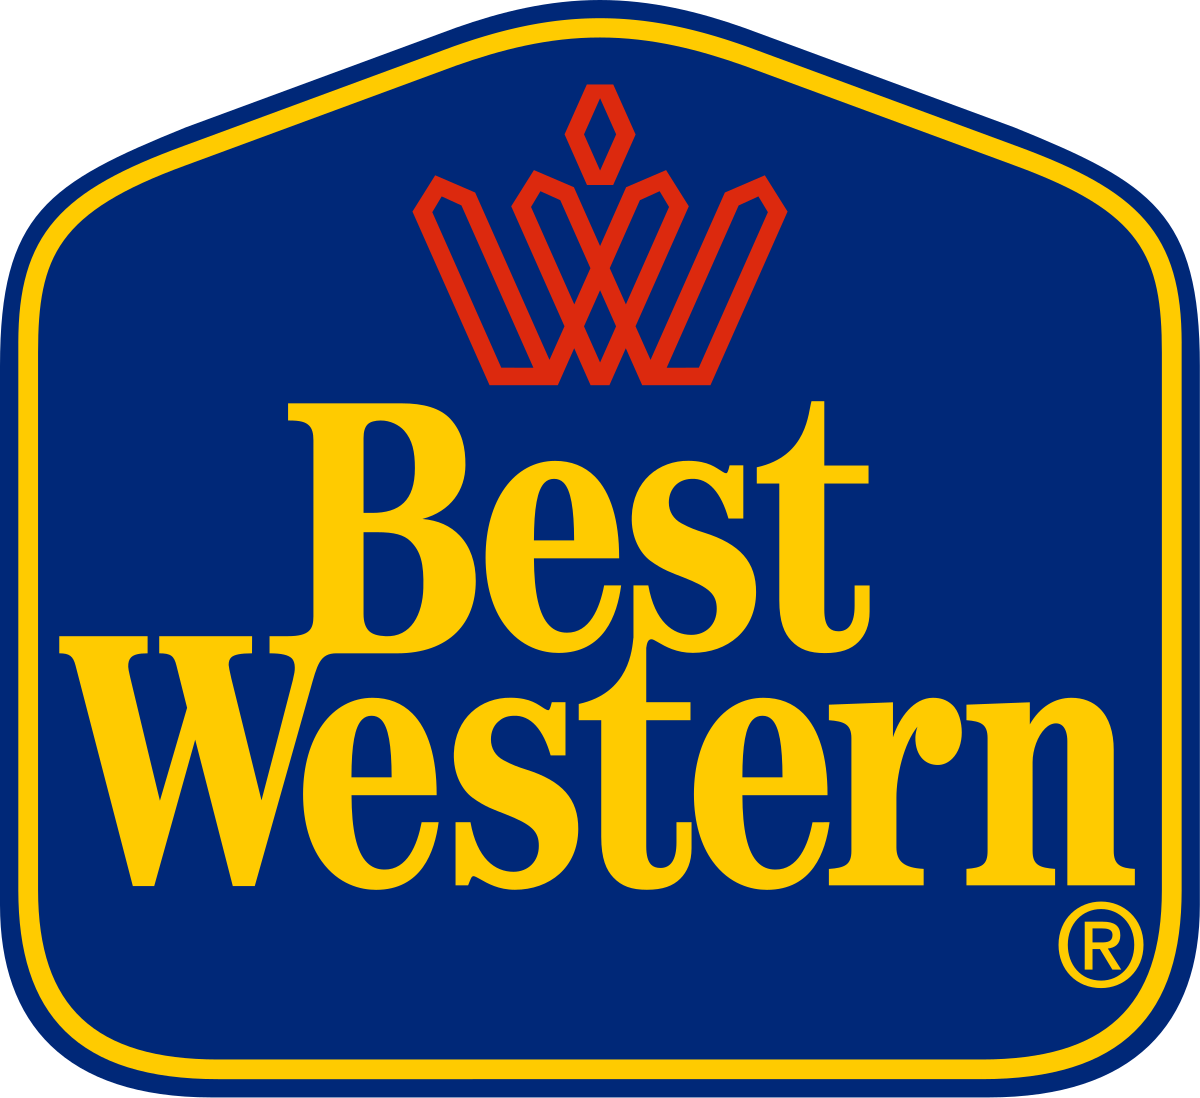 Best Western McCarran Inn